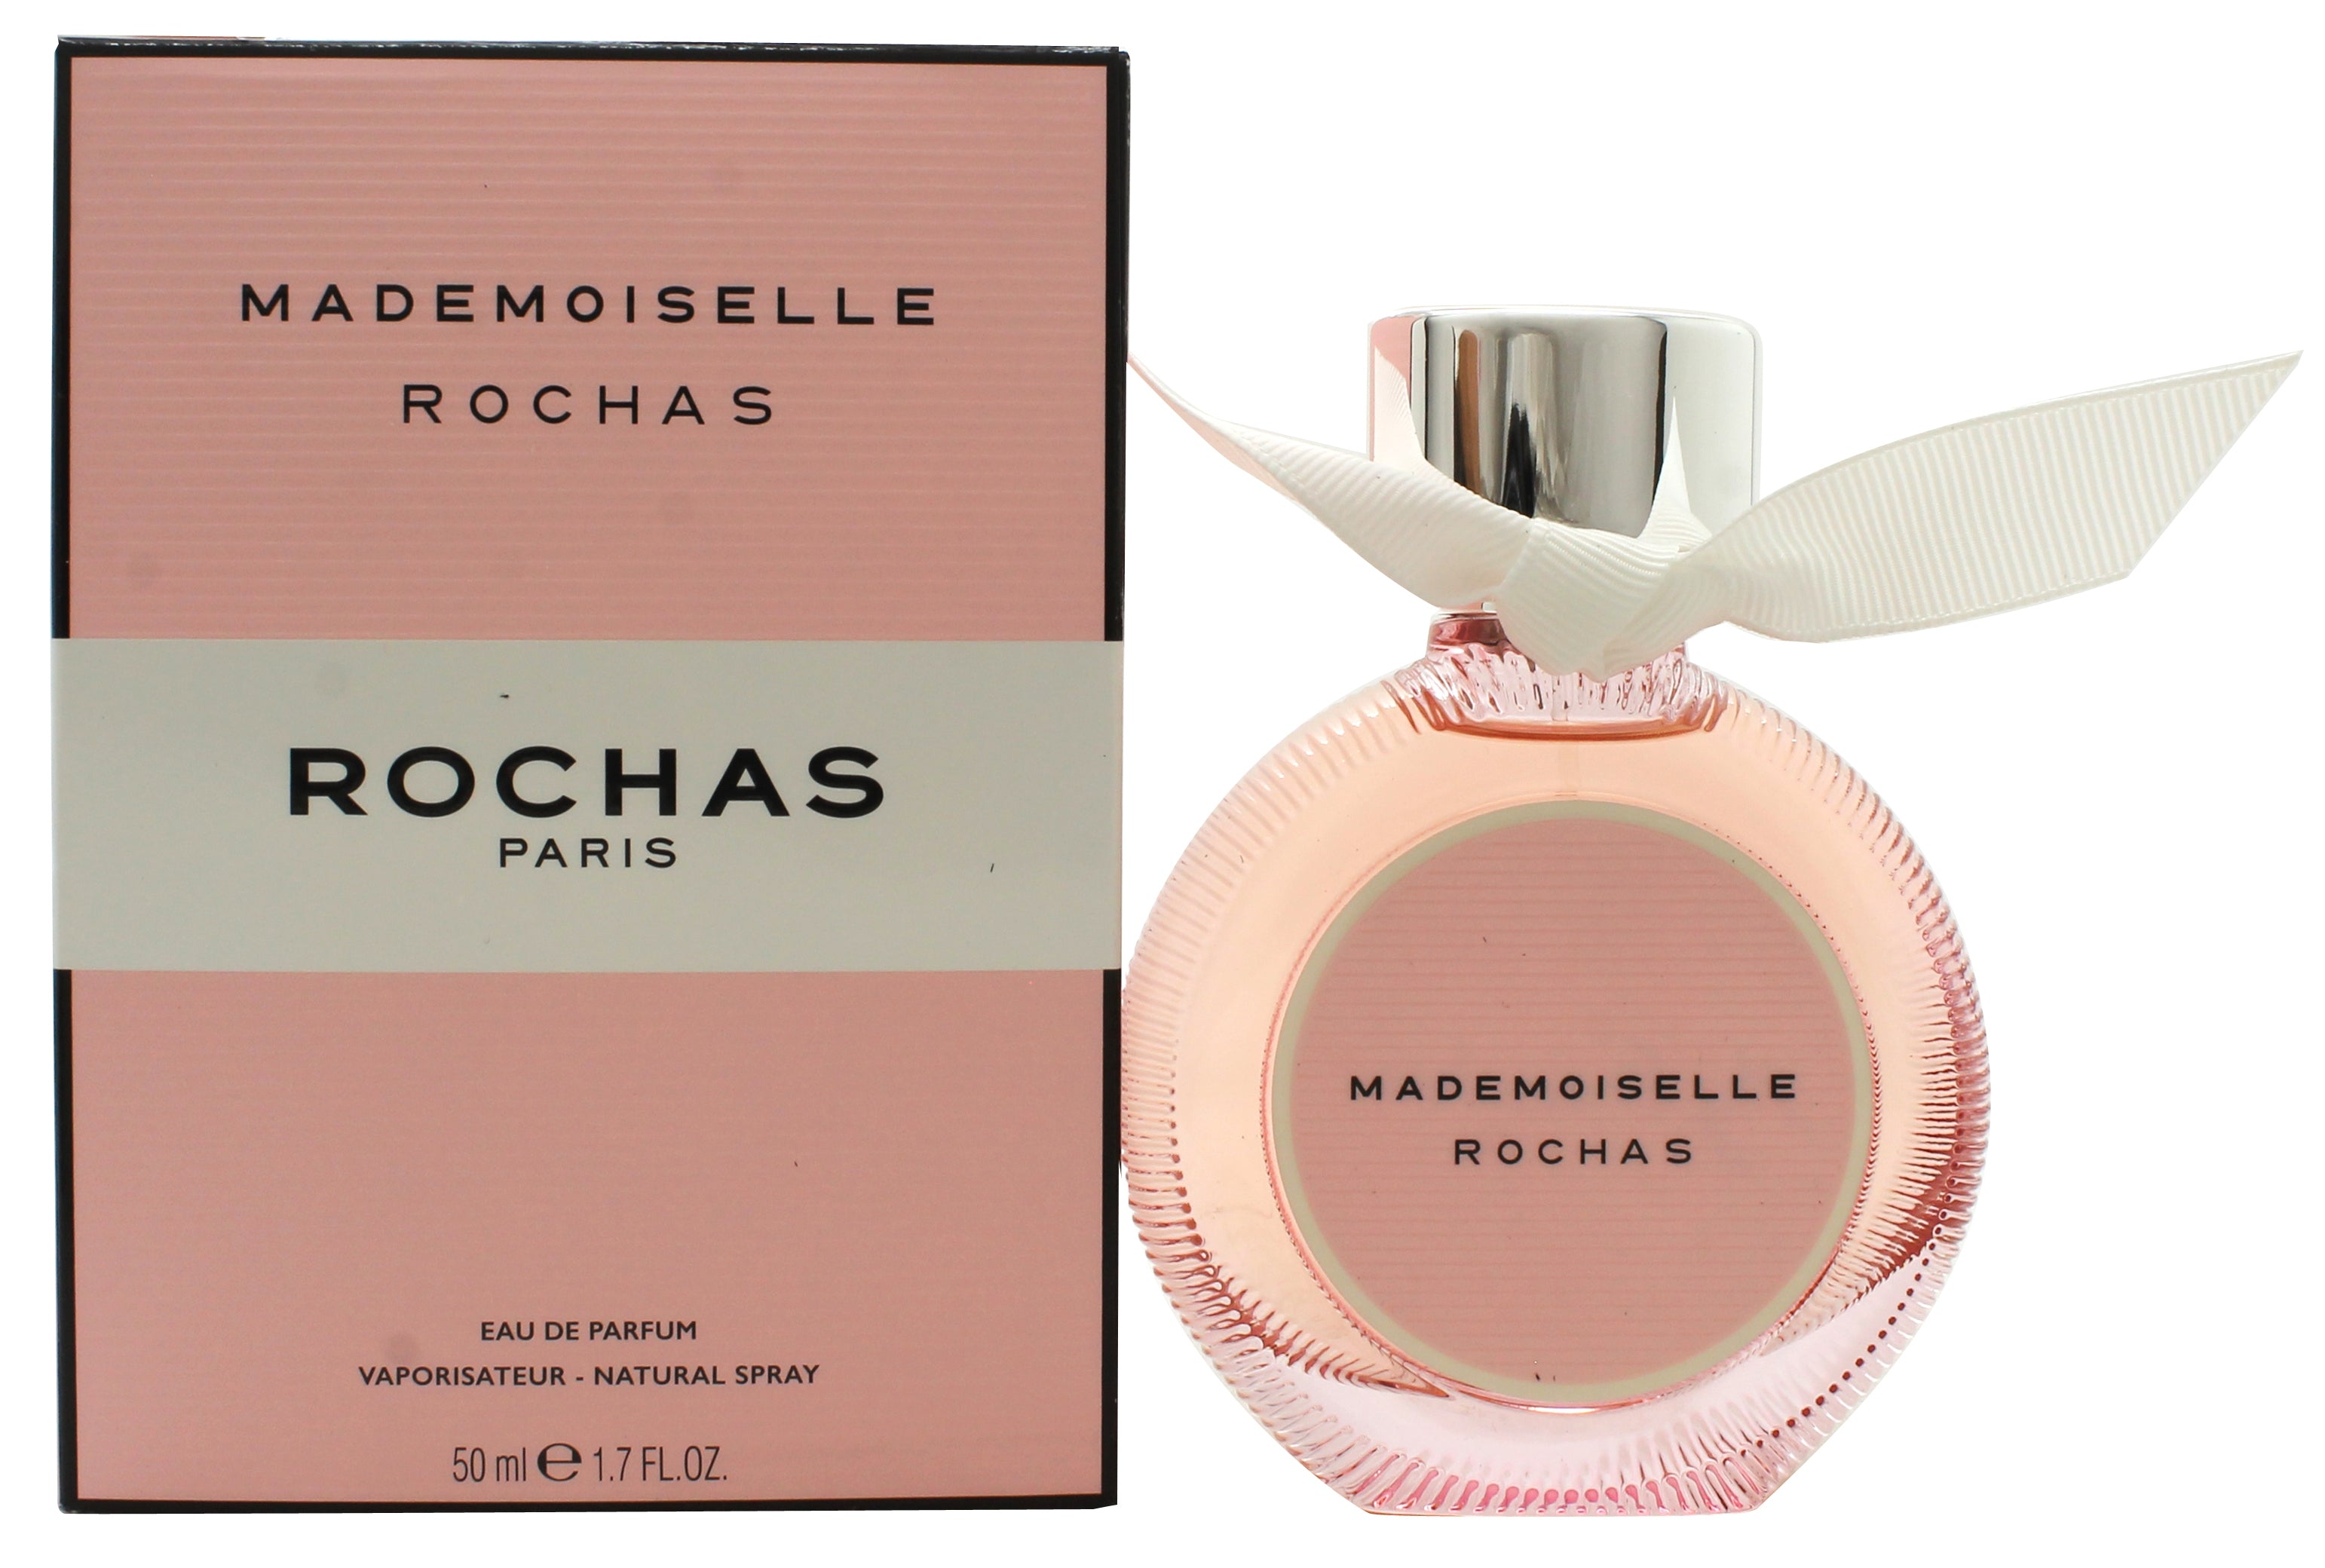 View Rochas Mademoiselle Rochas Eau de Parfum 50ml Spray information